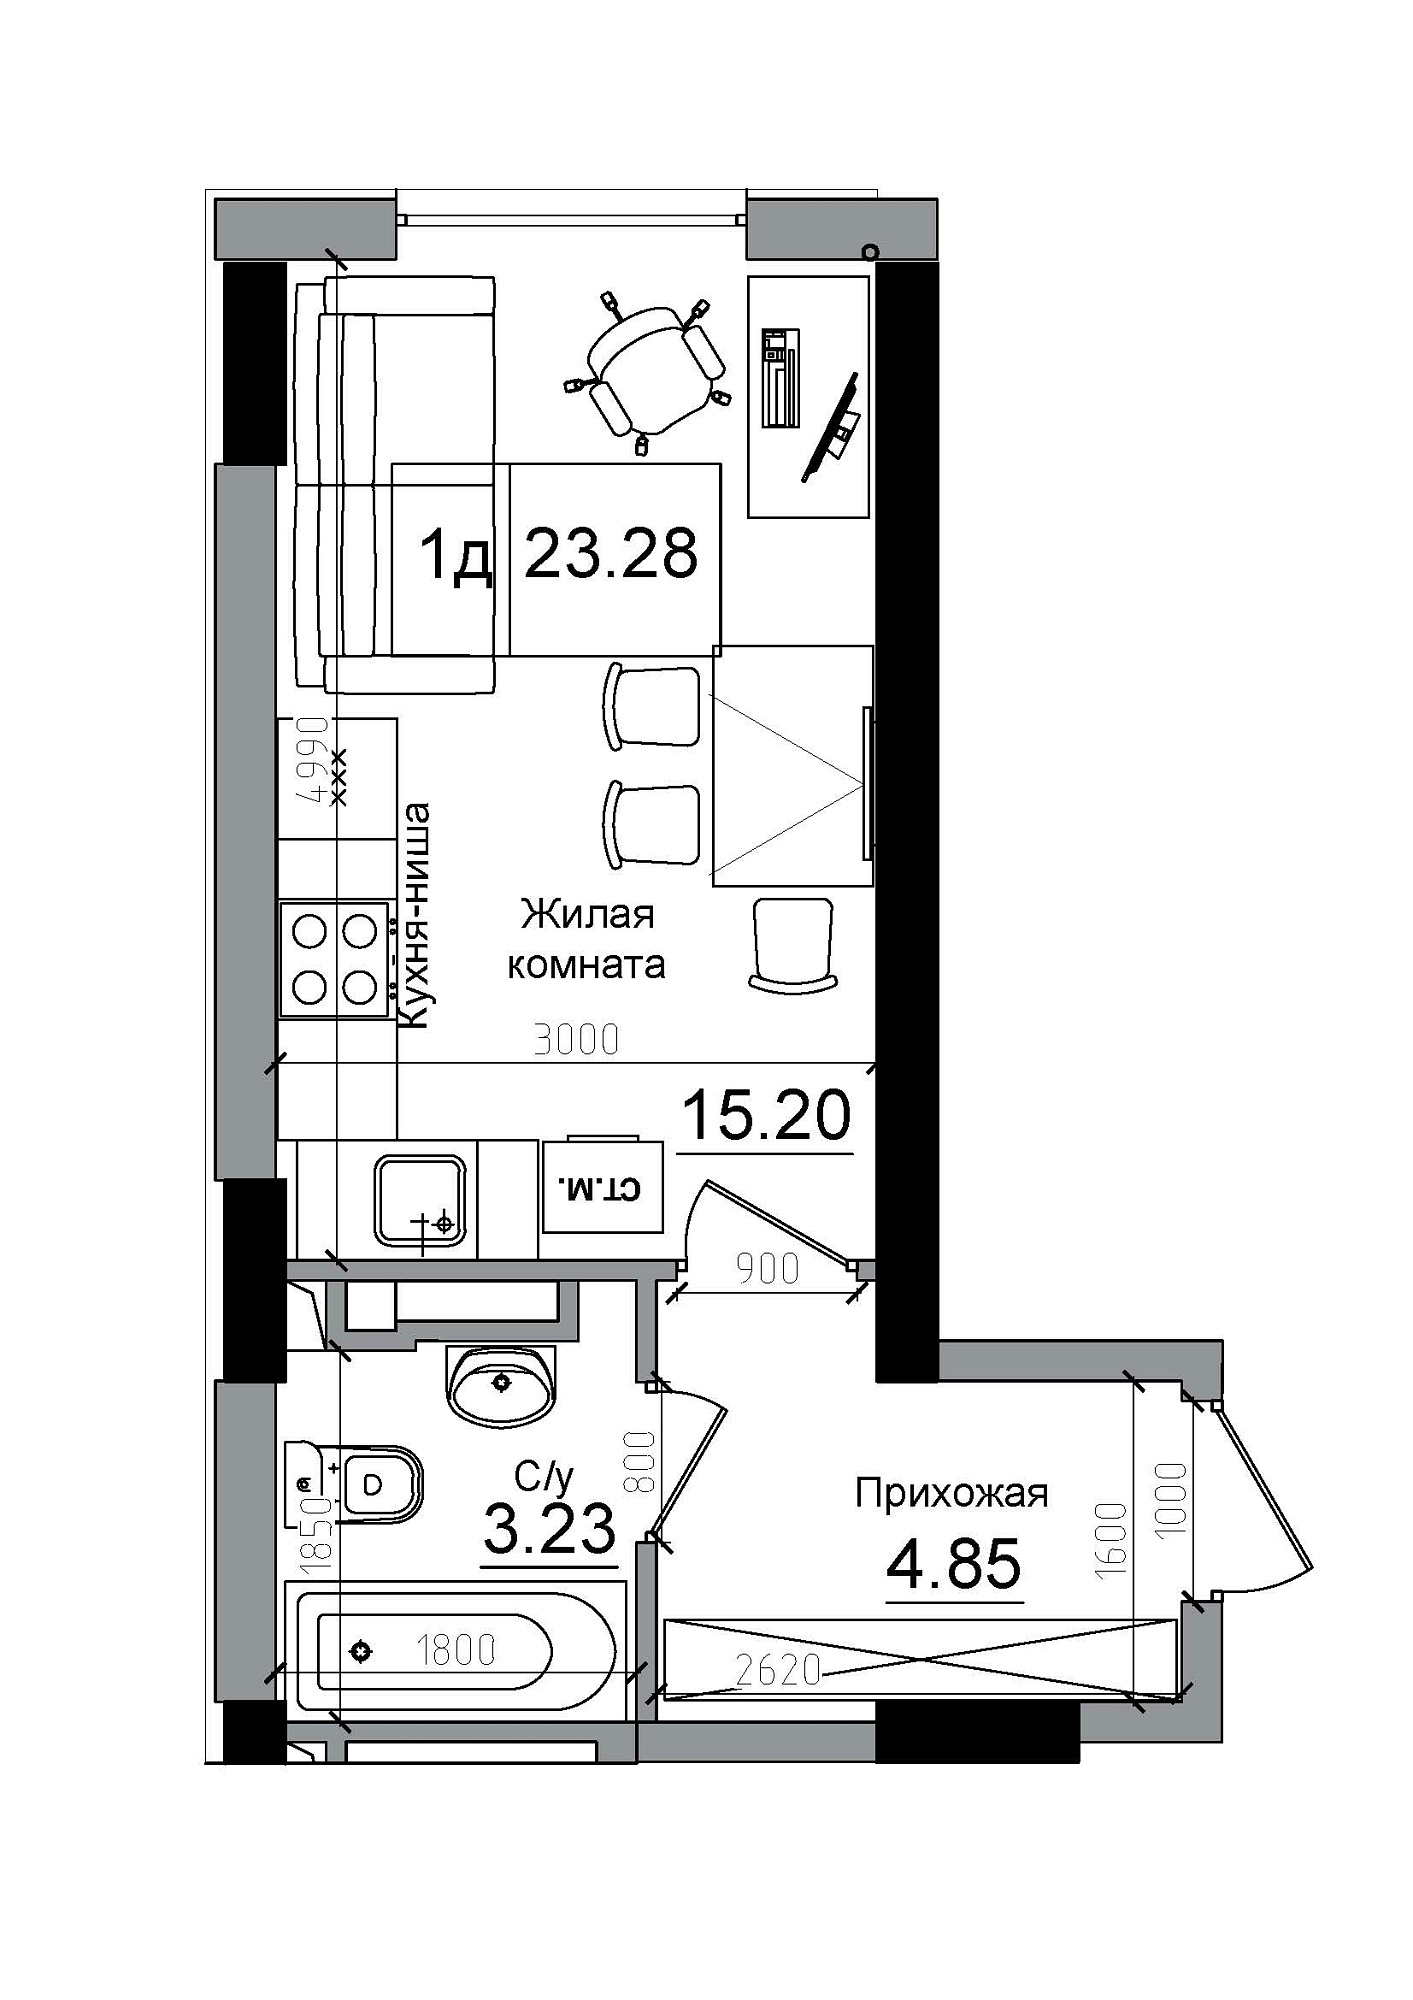 Planning Smart flats area 23.28m2, AB-12-05/00005.